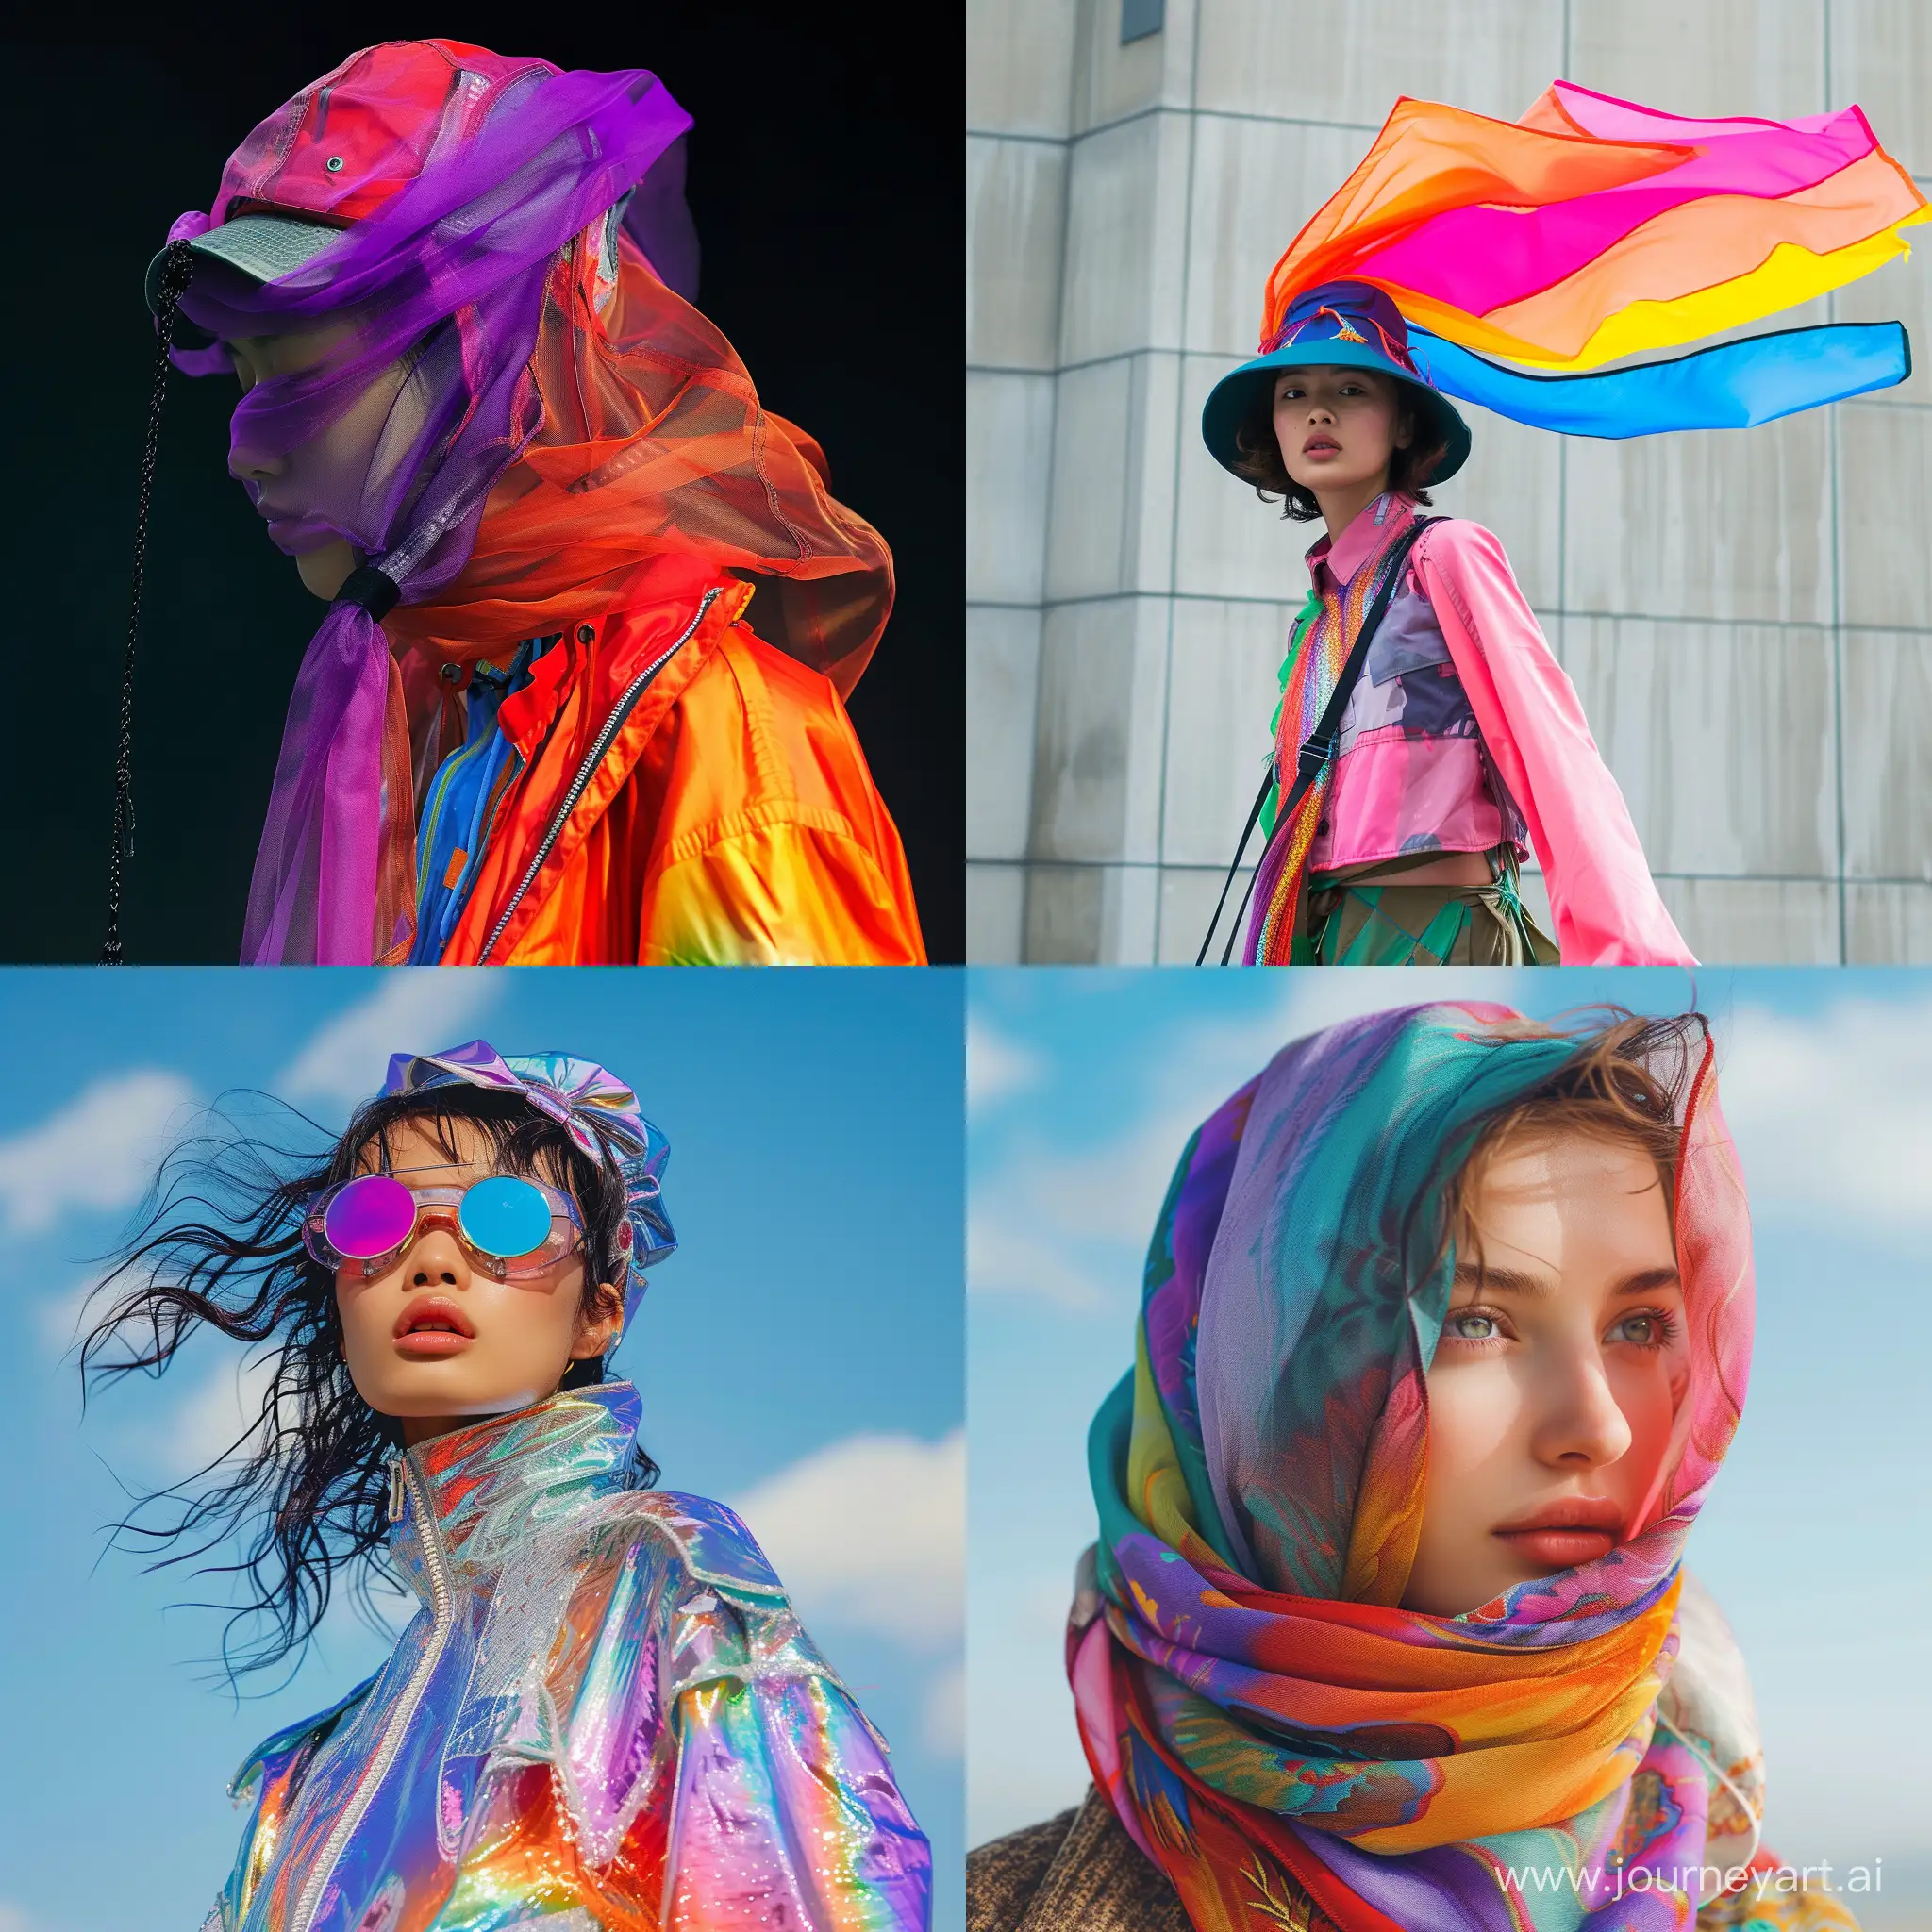 Stylish-Women-in-Vibrant-Windbreakers-Fashionably-Pose